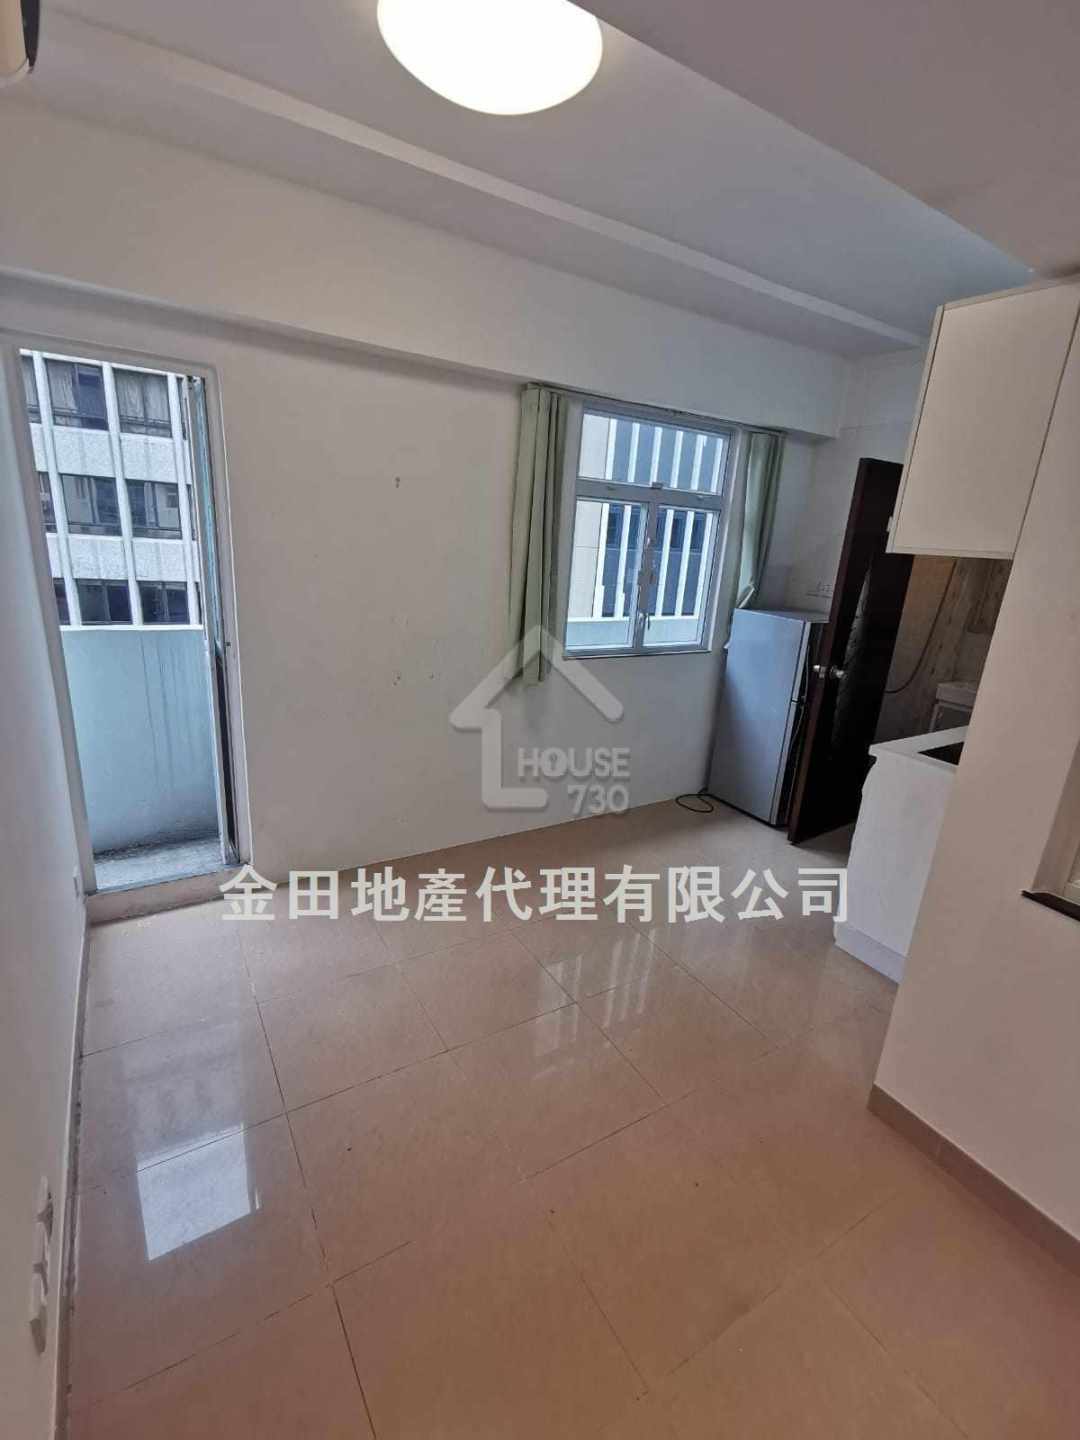 Wan Chai SUN TAO BUILDING Upper Floor Living Room House730-6282653